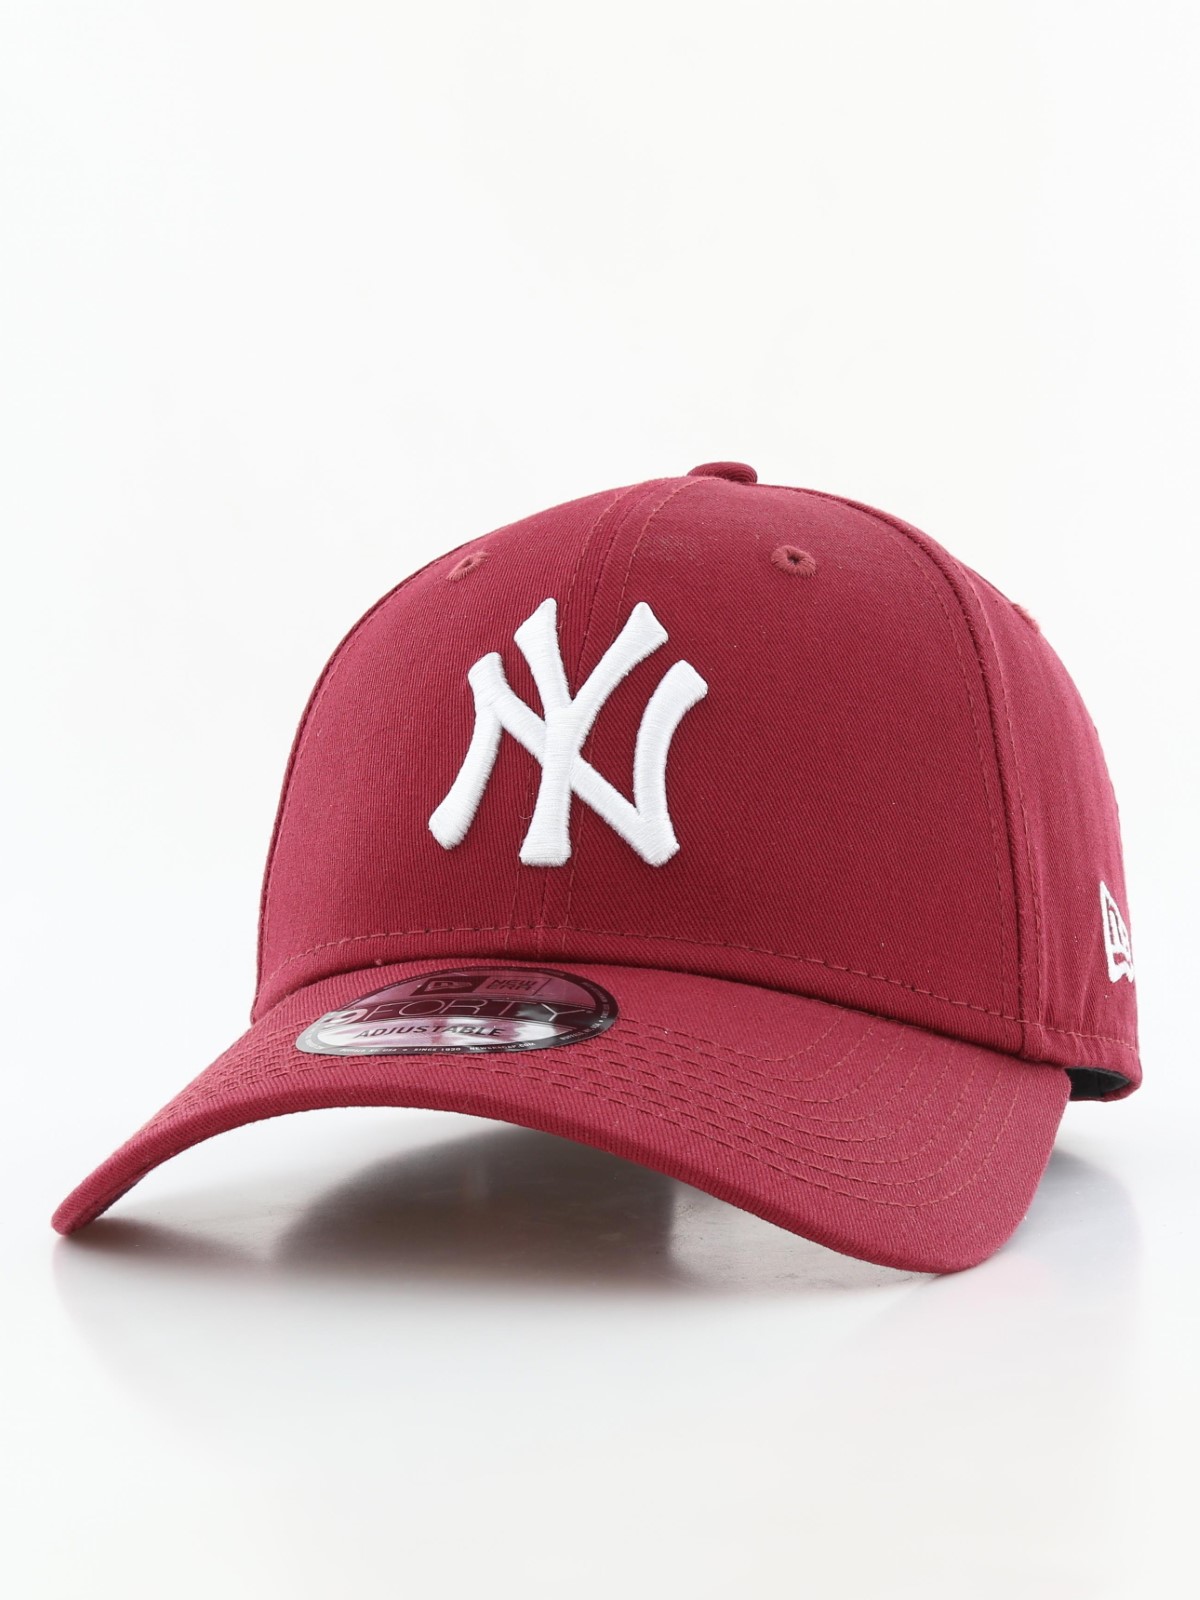 New Era League Essential New York Yankees Men's Cap Cardinal/White